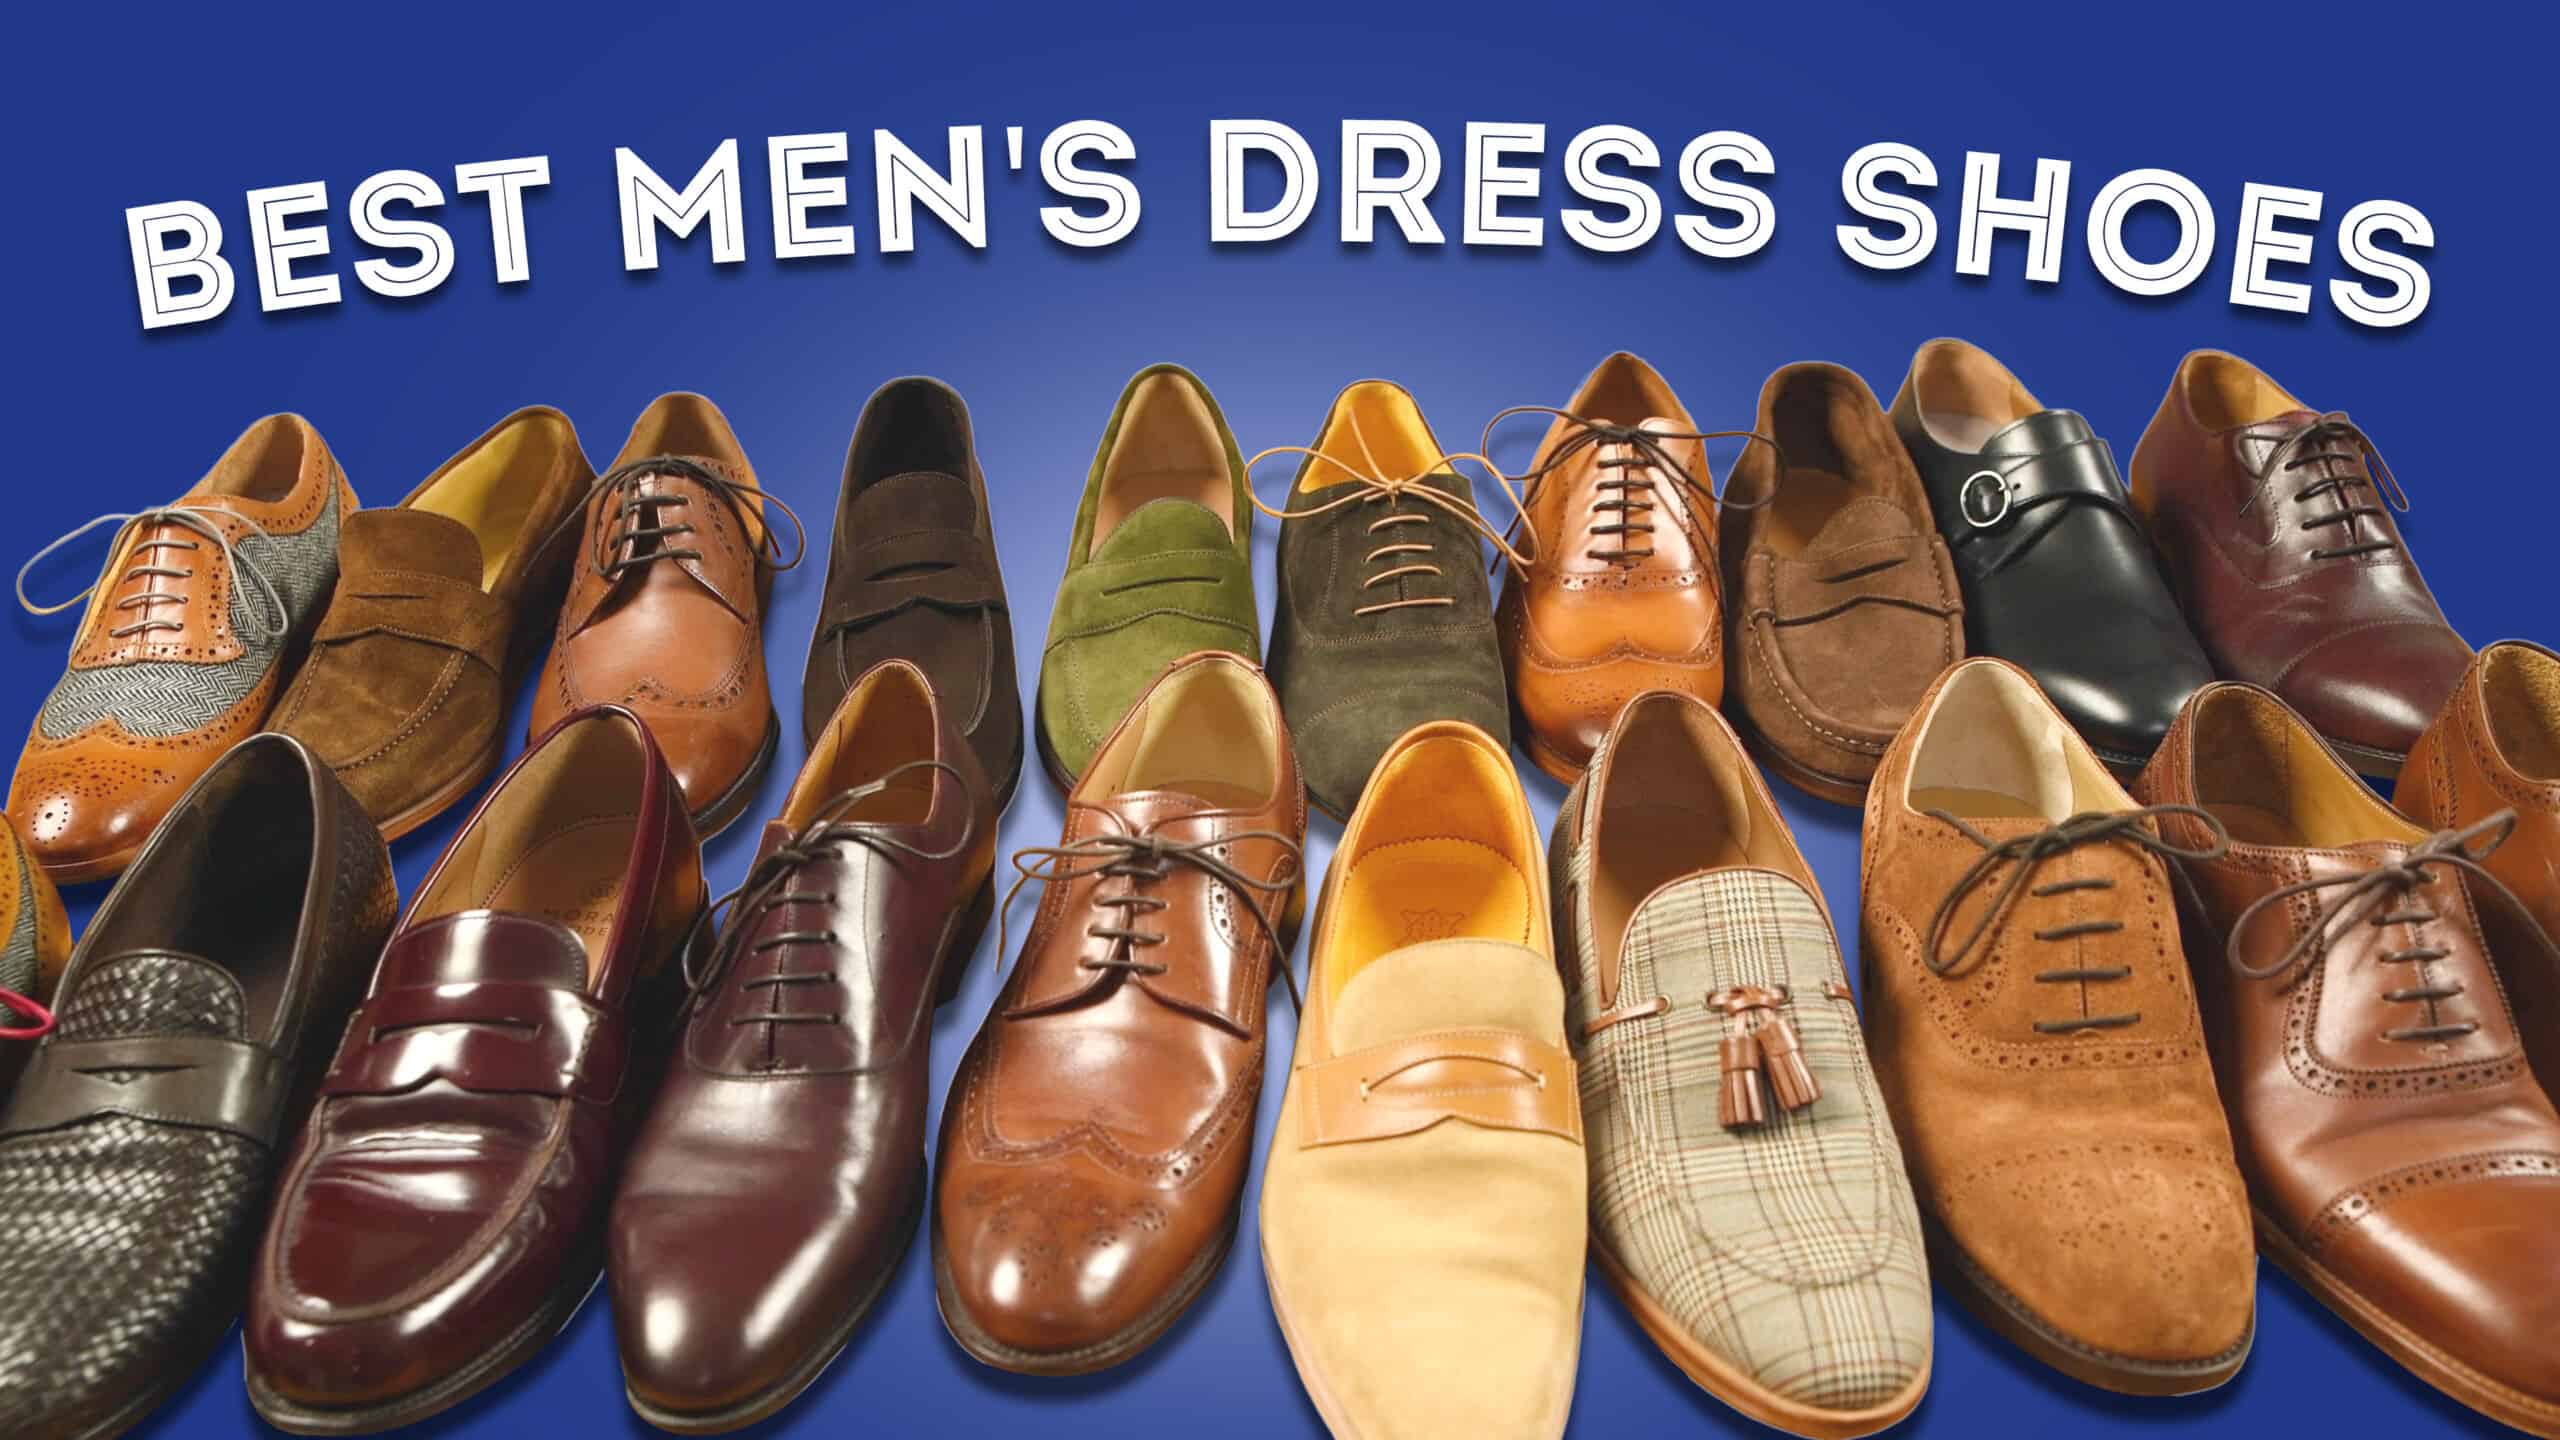 Sparrow suggest name Best Men's Dress Shoes, $100-300: Beckett Simonon, Ace Marks, Taft & More